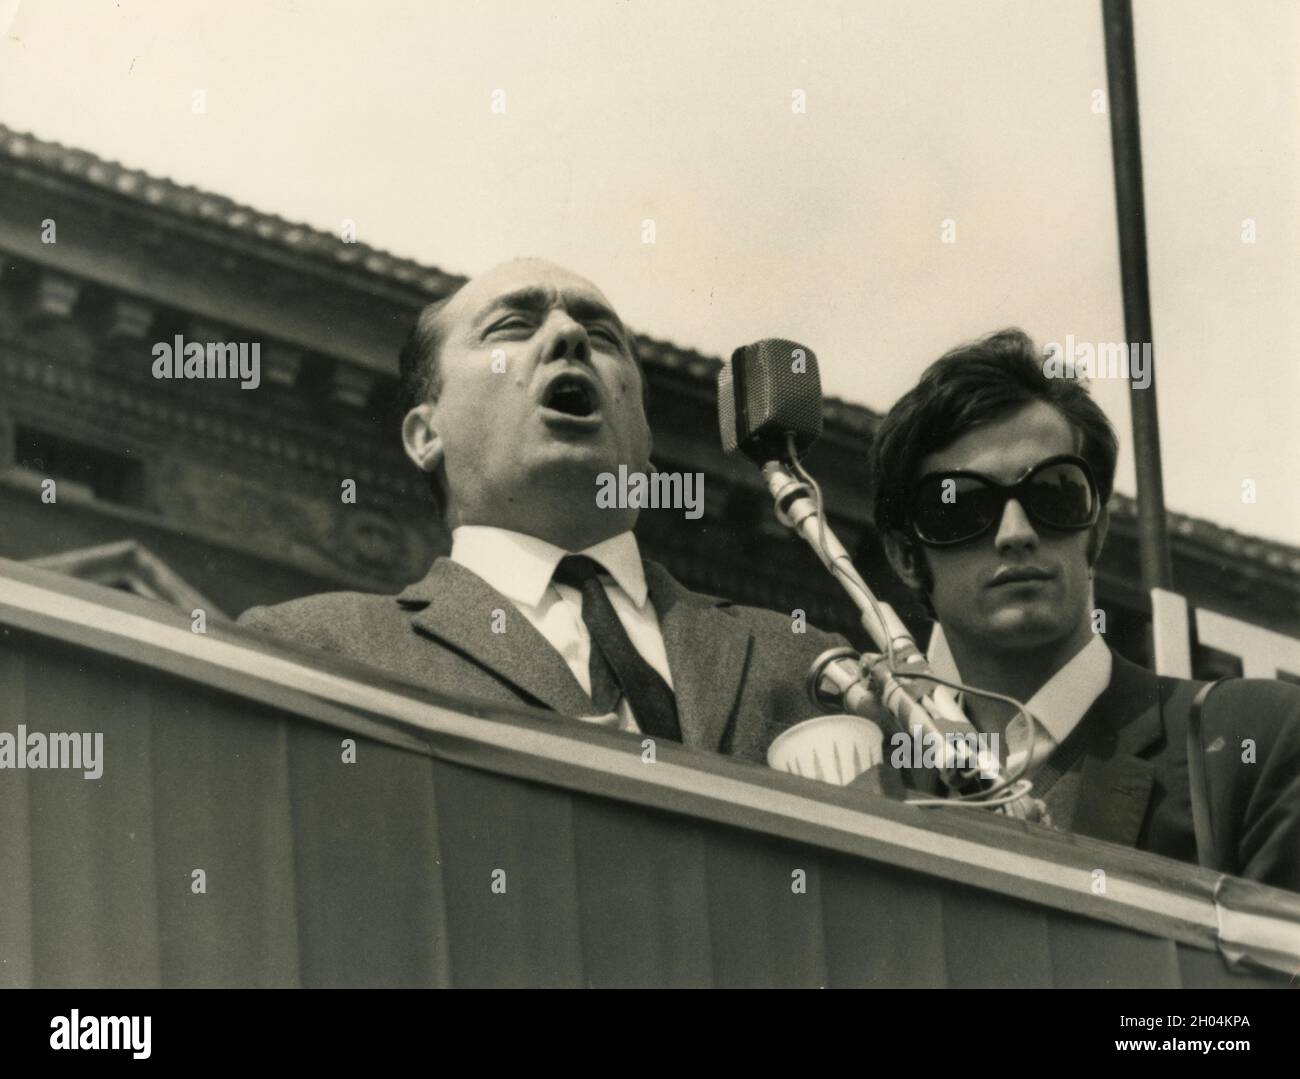 Unidentified Italian politician at a rally, 1980s Stock Photo